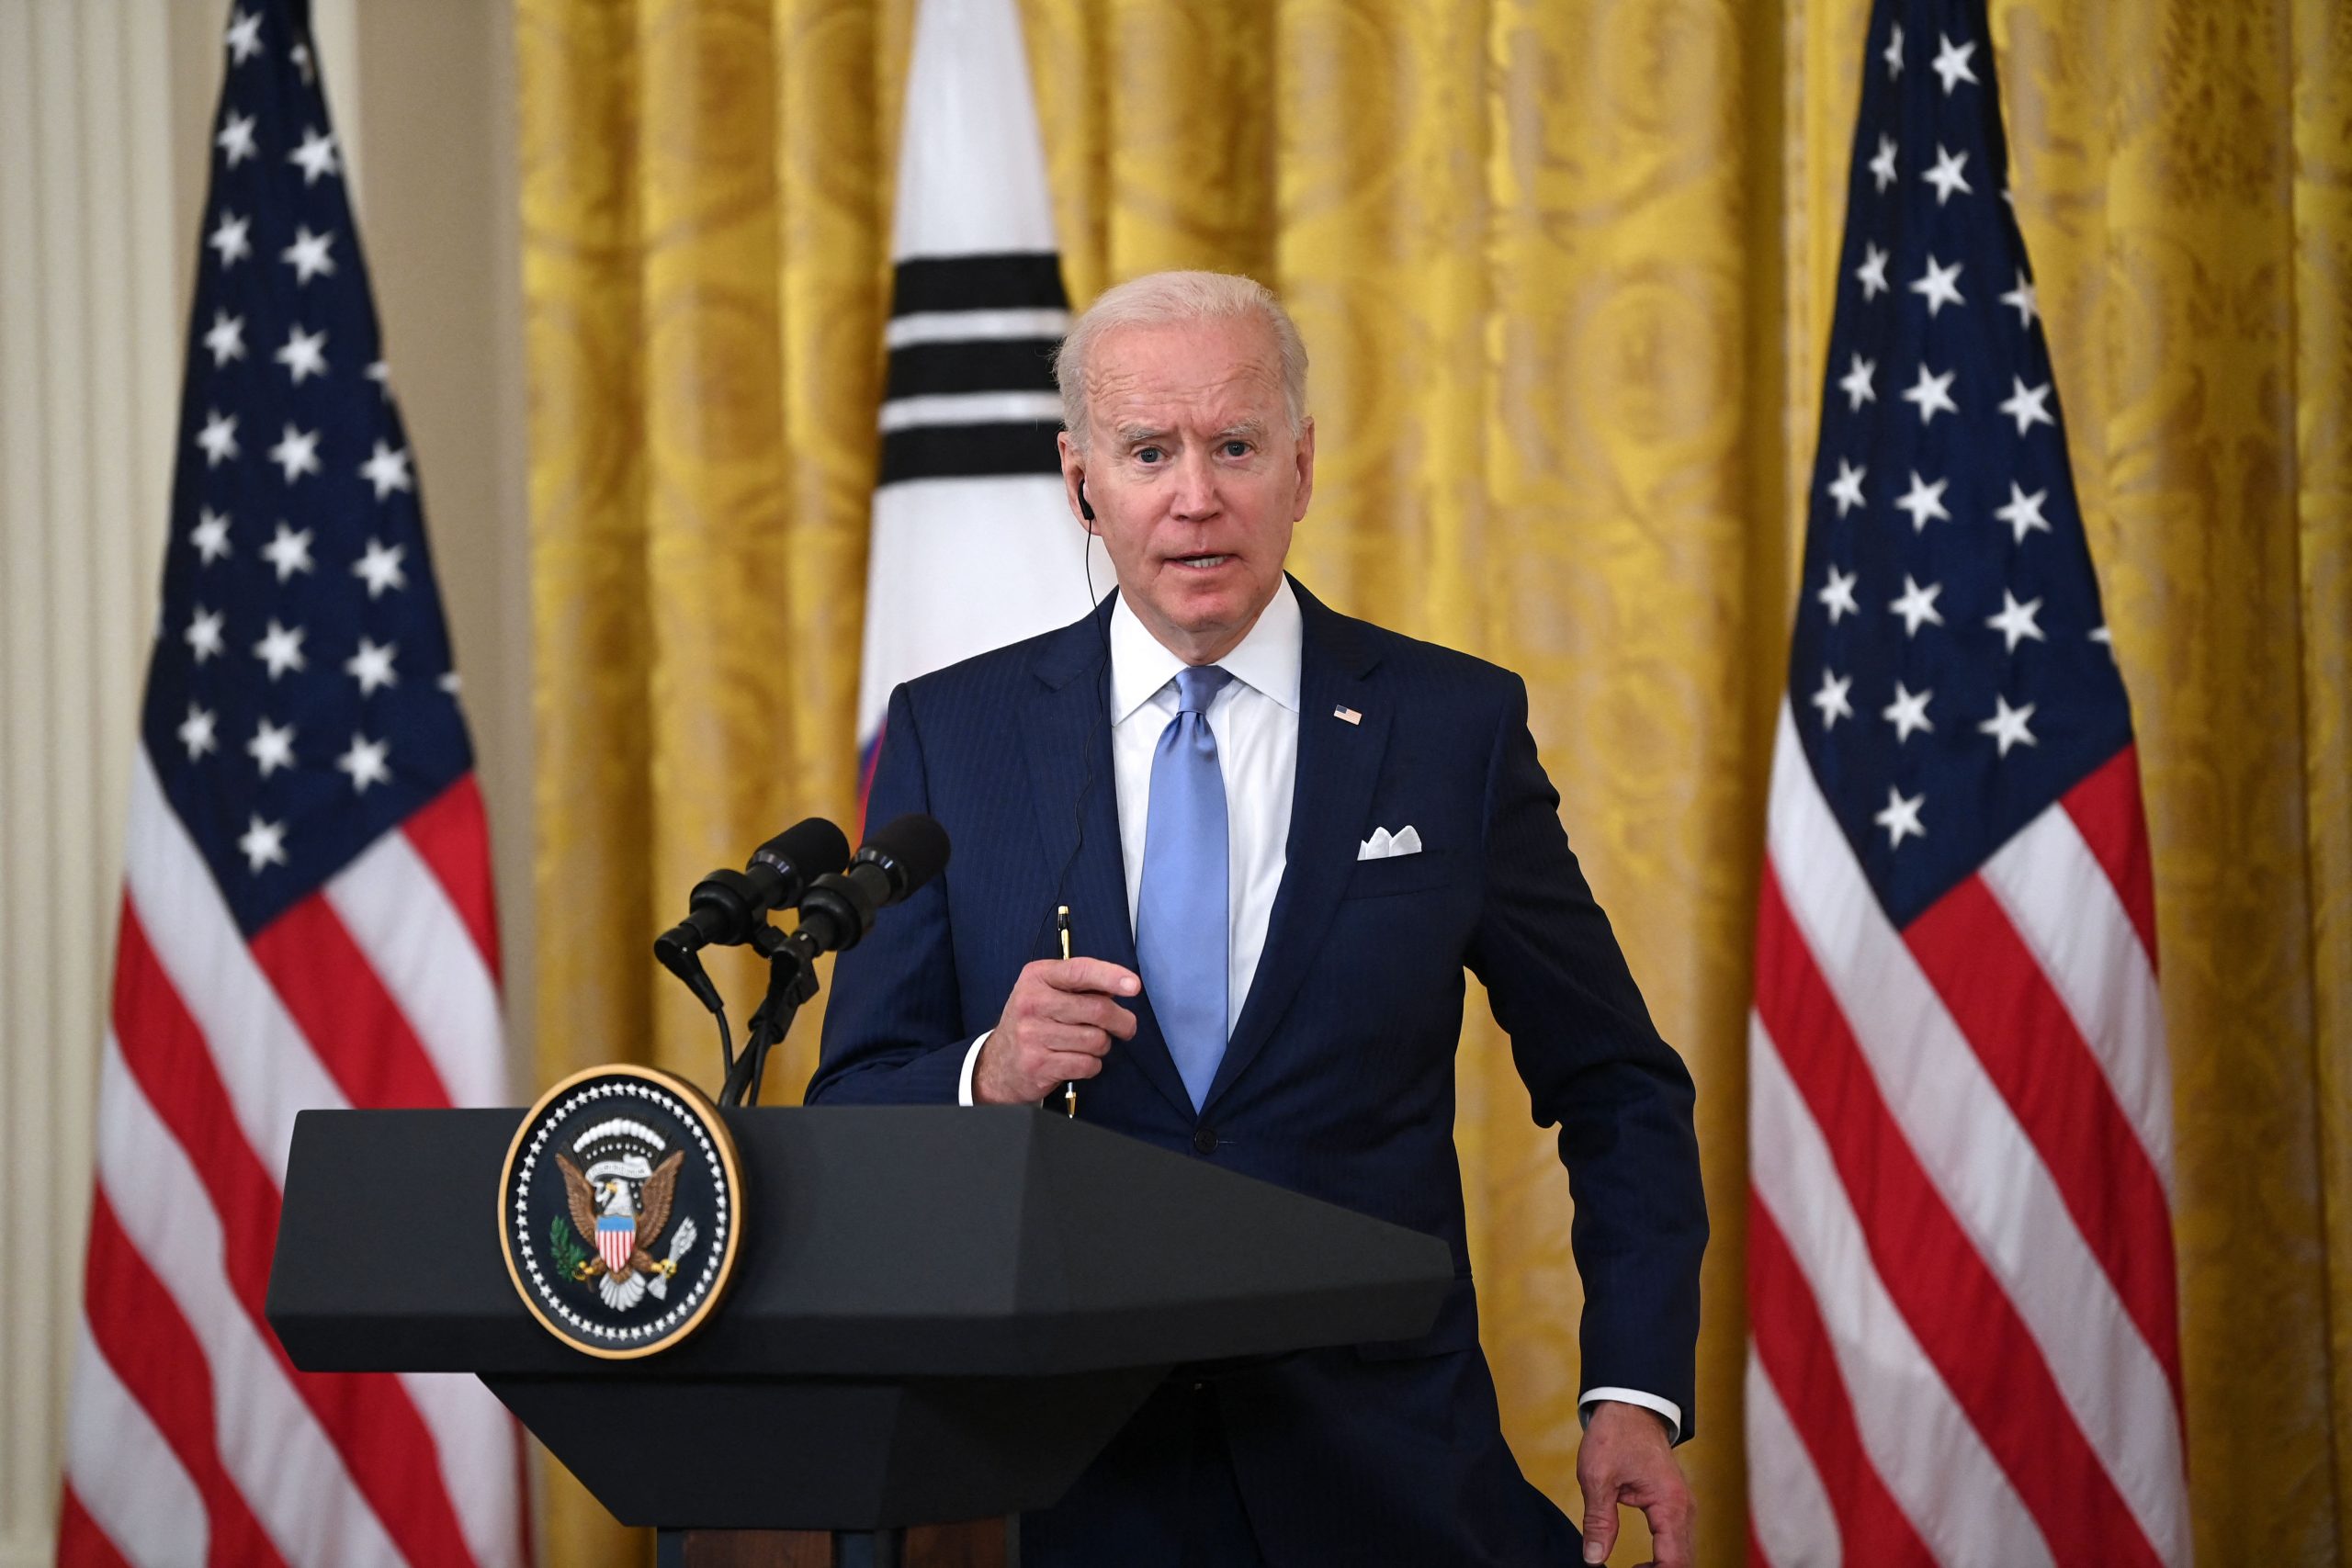 NATO Summit: Joe Biden lays down his agenda for meeting with Vladimir Putin